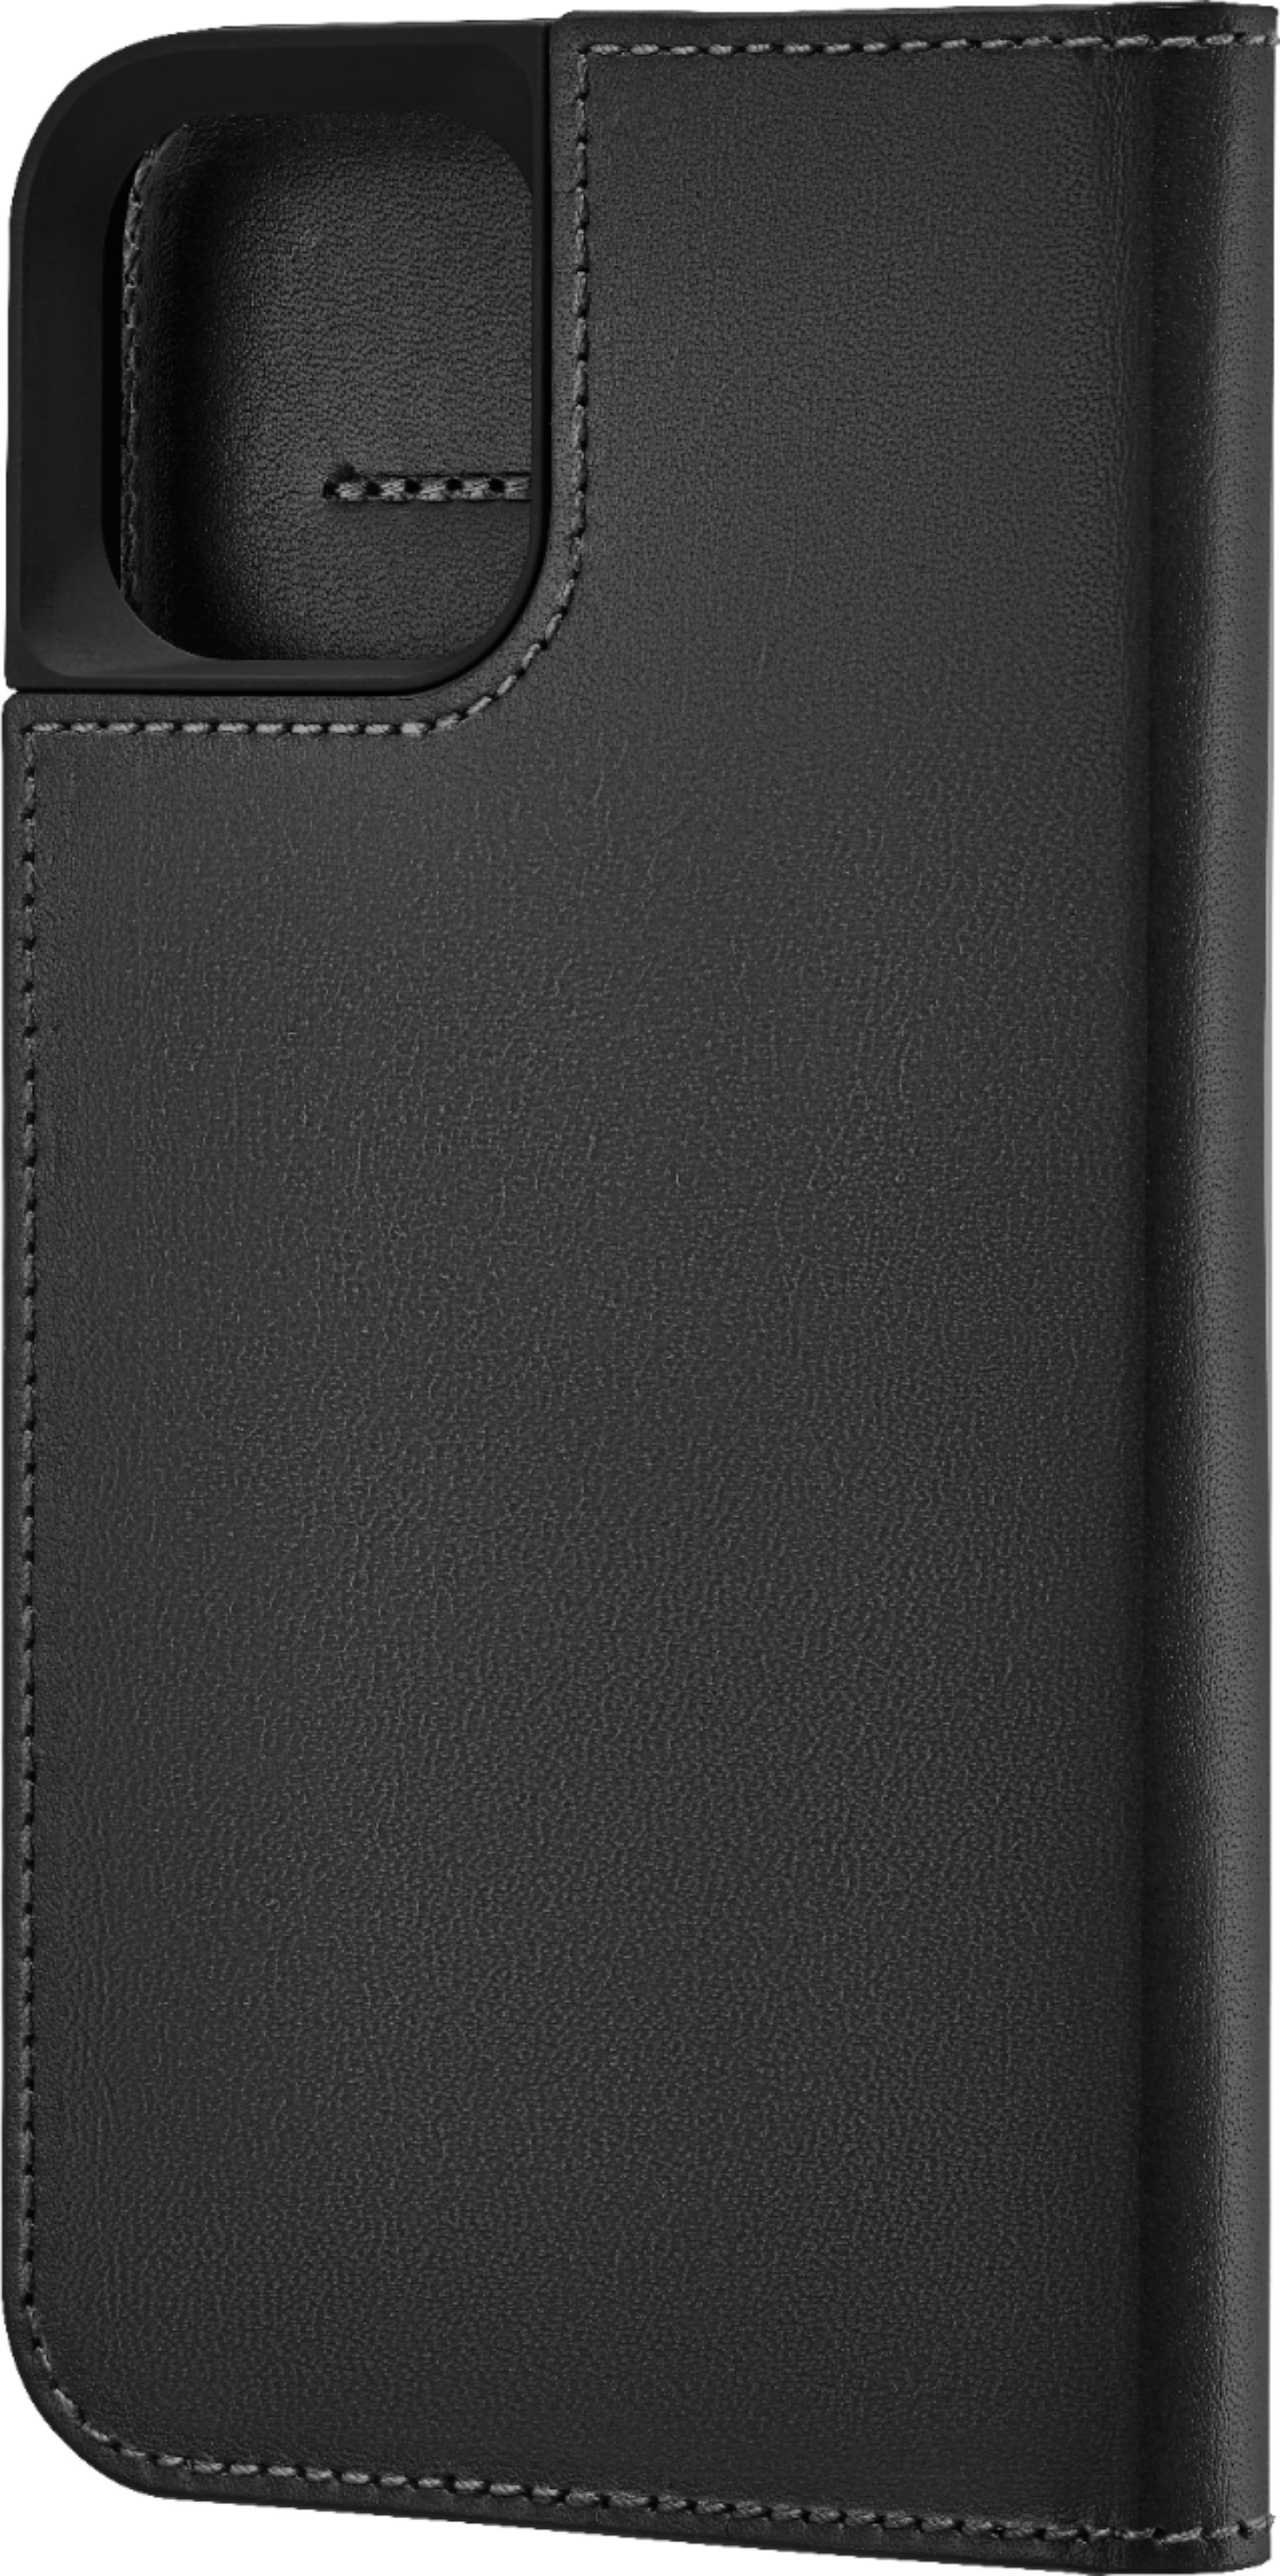 iPhone 12 Pro Max Wallet Case Case | Caseology Calin - Saffiano Black